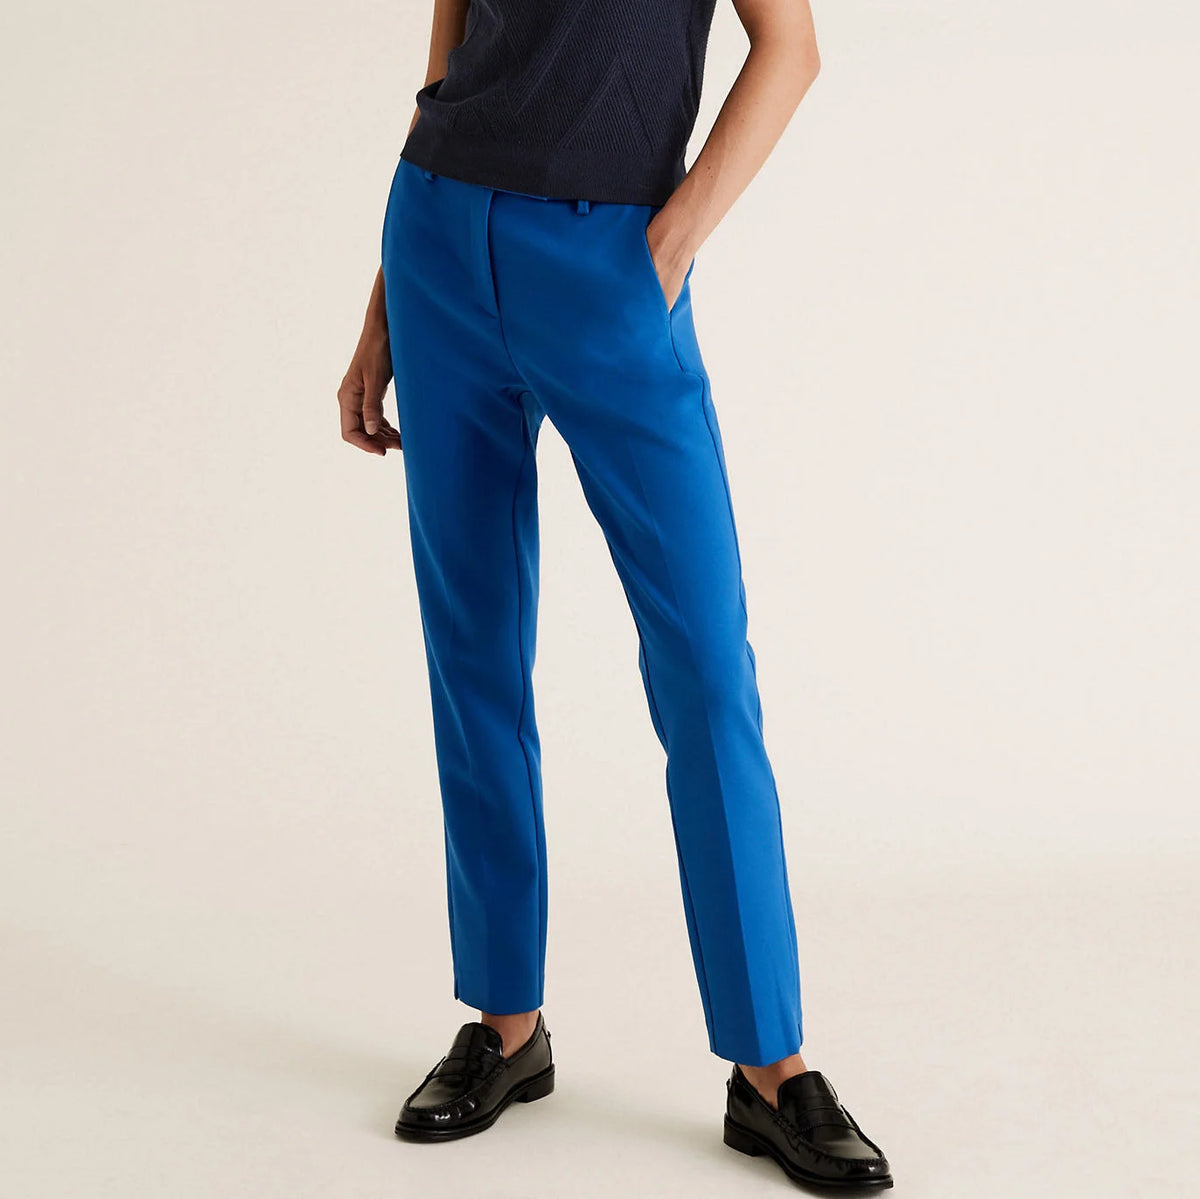 M&S Mia Slim Fit 7/8 Length Trousers Royal Blue / 10 / Long